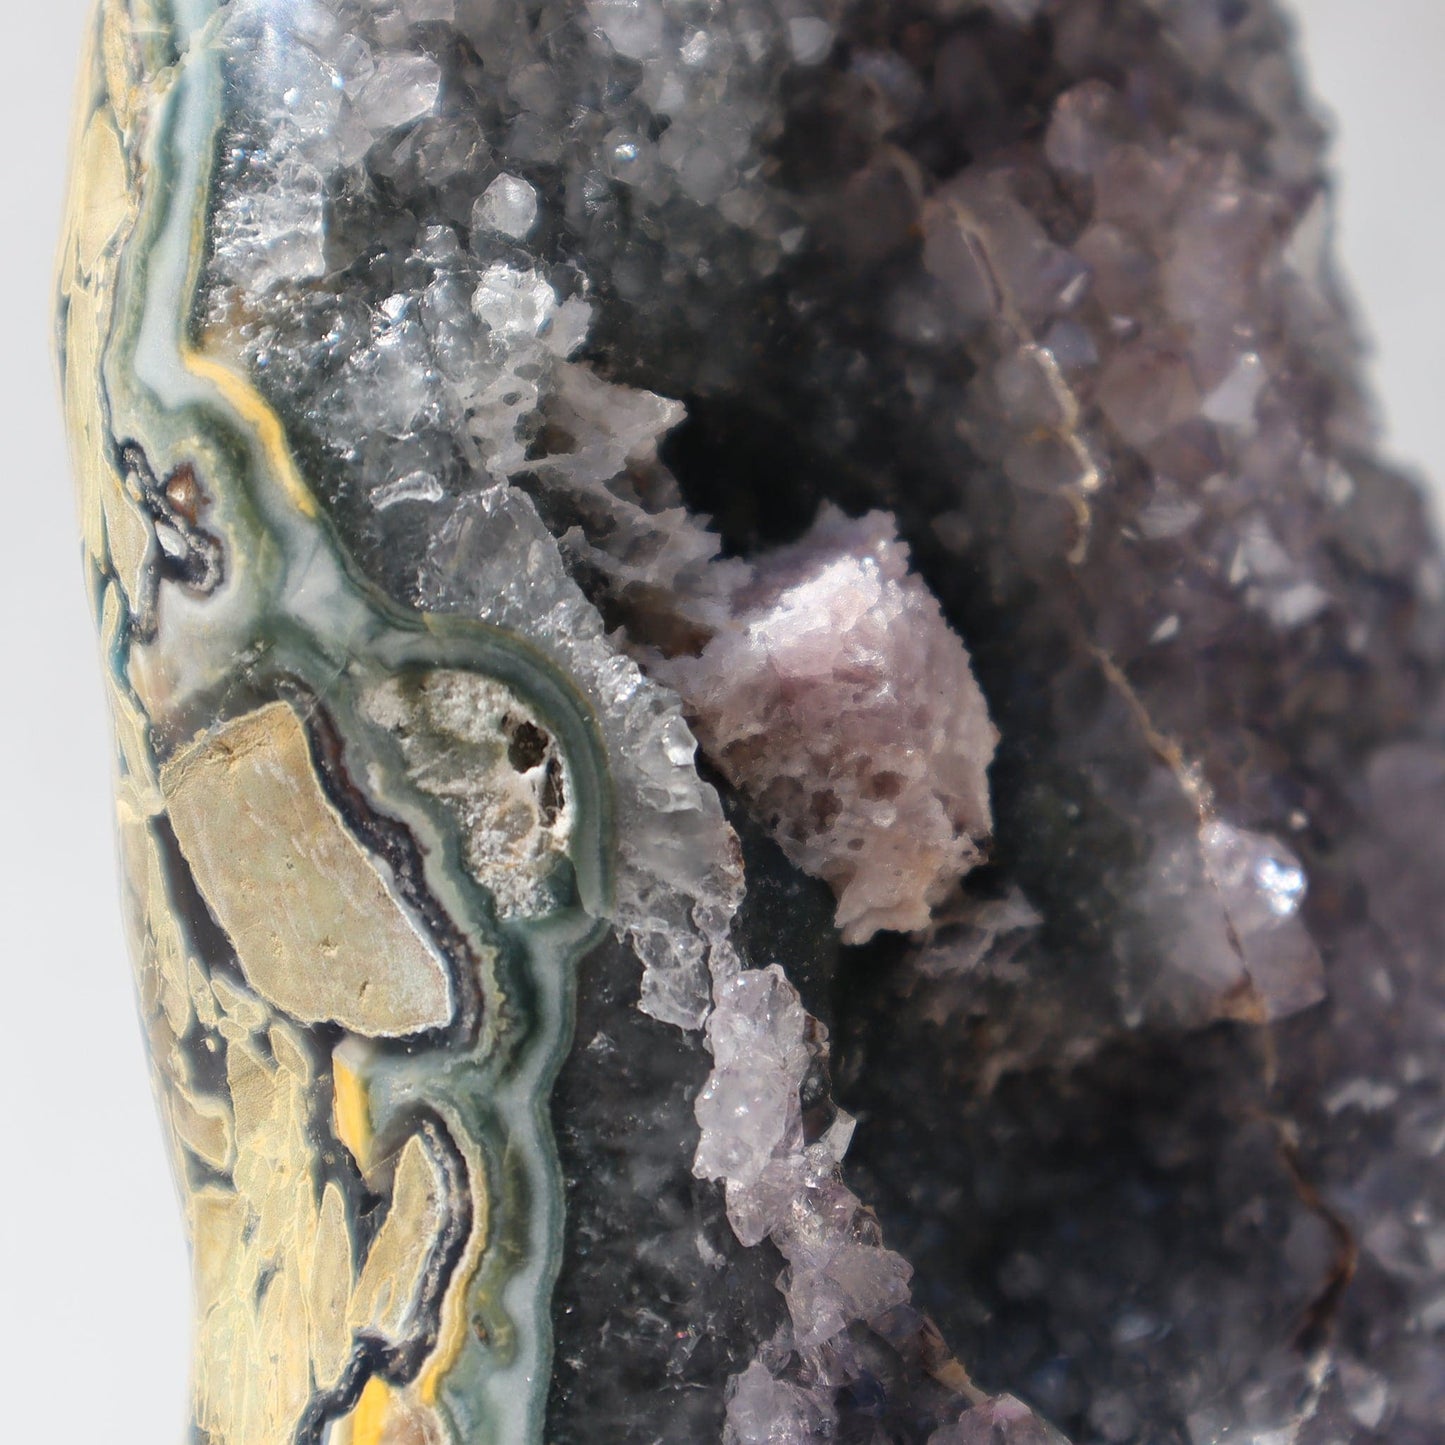 Rare Minerals Amethyst Geode - Deepest Earth